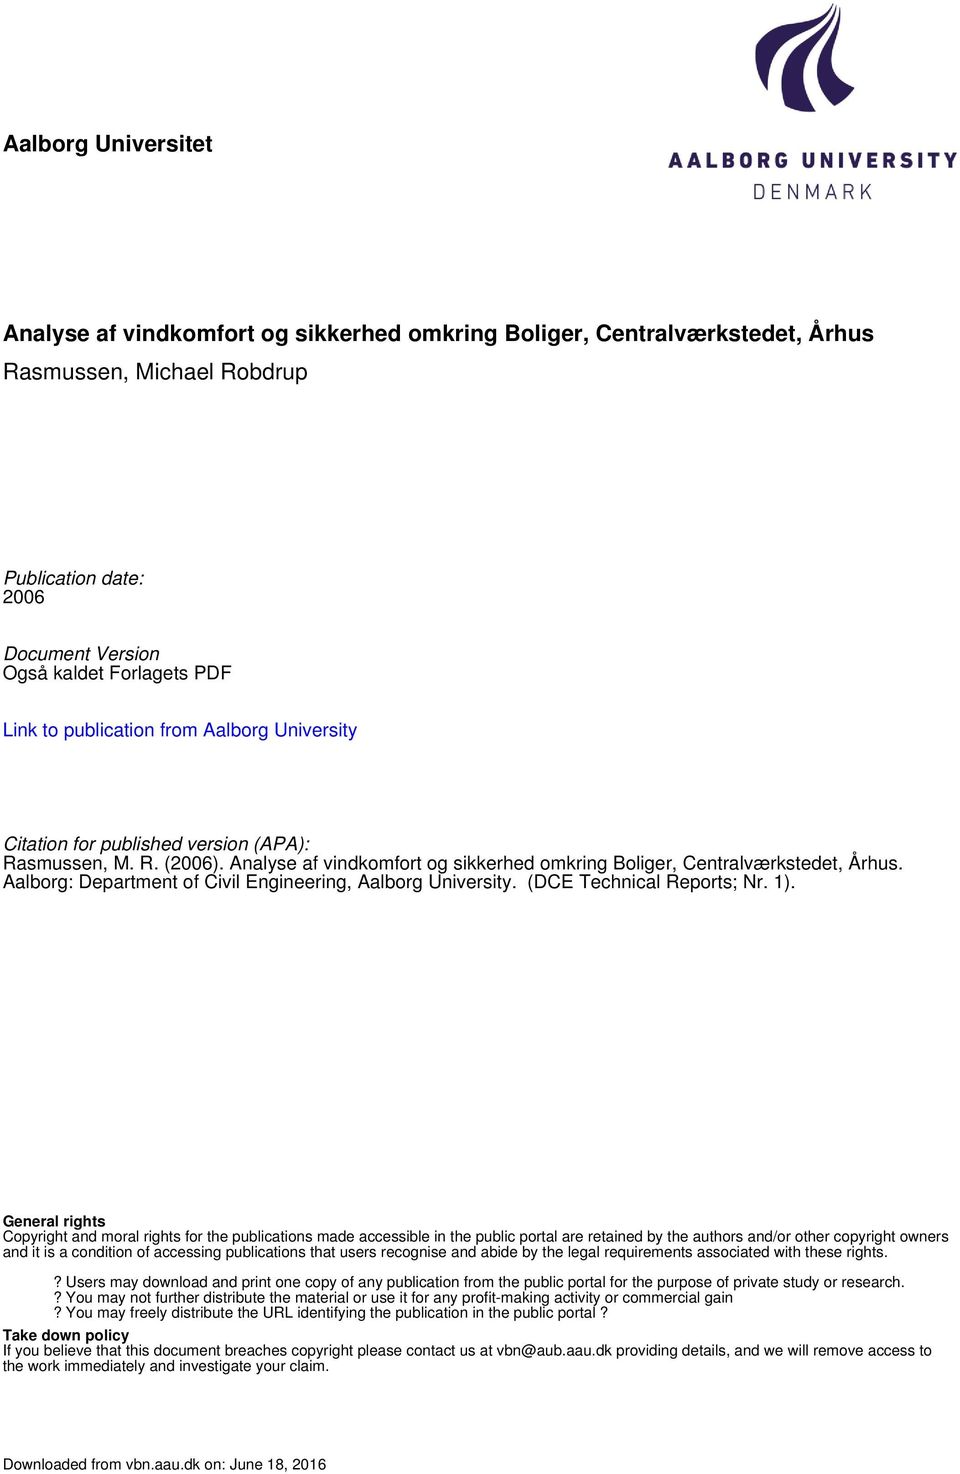 Aalborg: Department of Civil Engineering, Aalborg University. (DCE Technical Reports; Nr. 1).